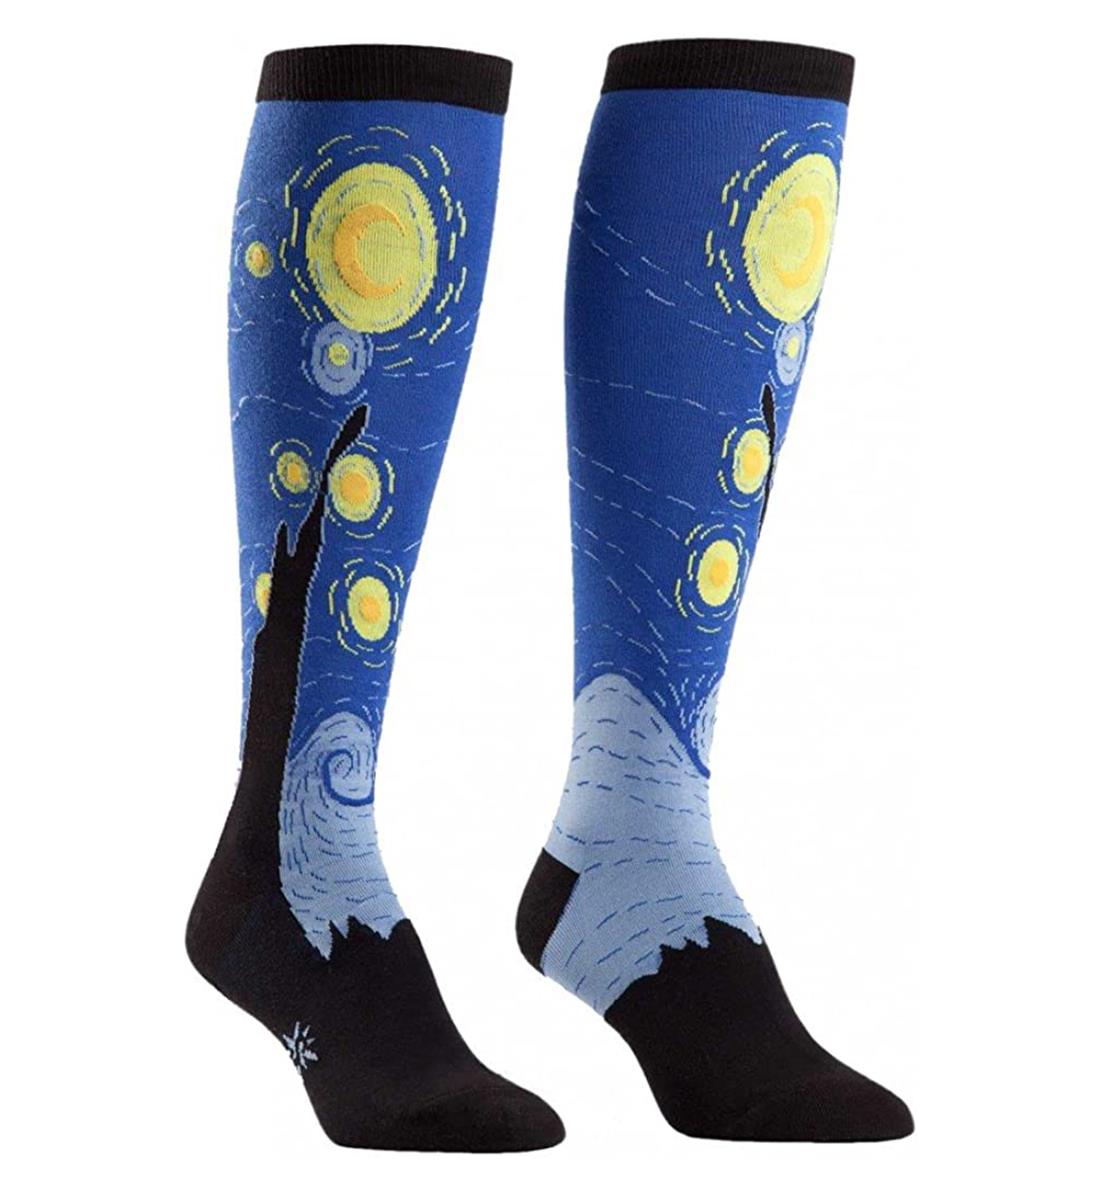 SOCK it to me Unisex Knee High Socks (f0121),Starry Night - Starry Night,One Size